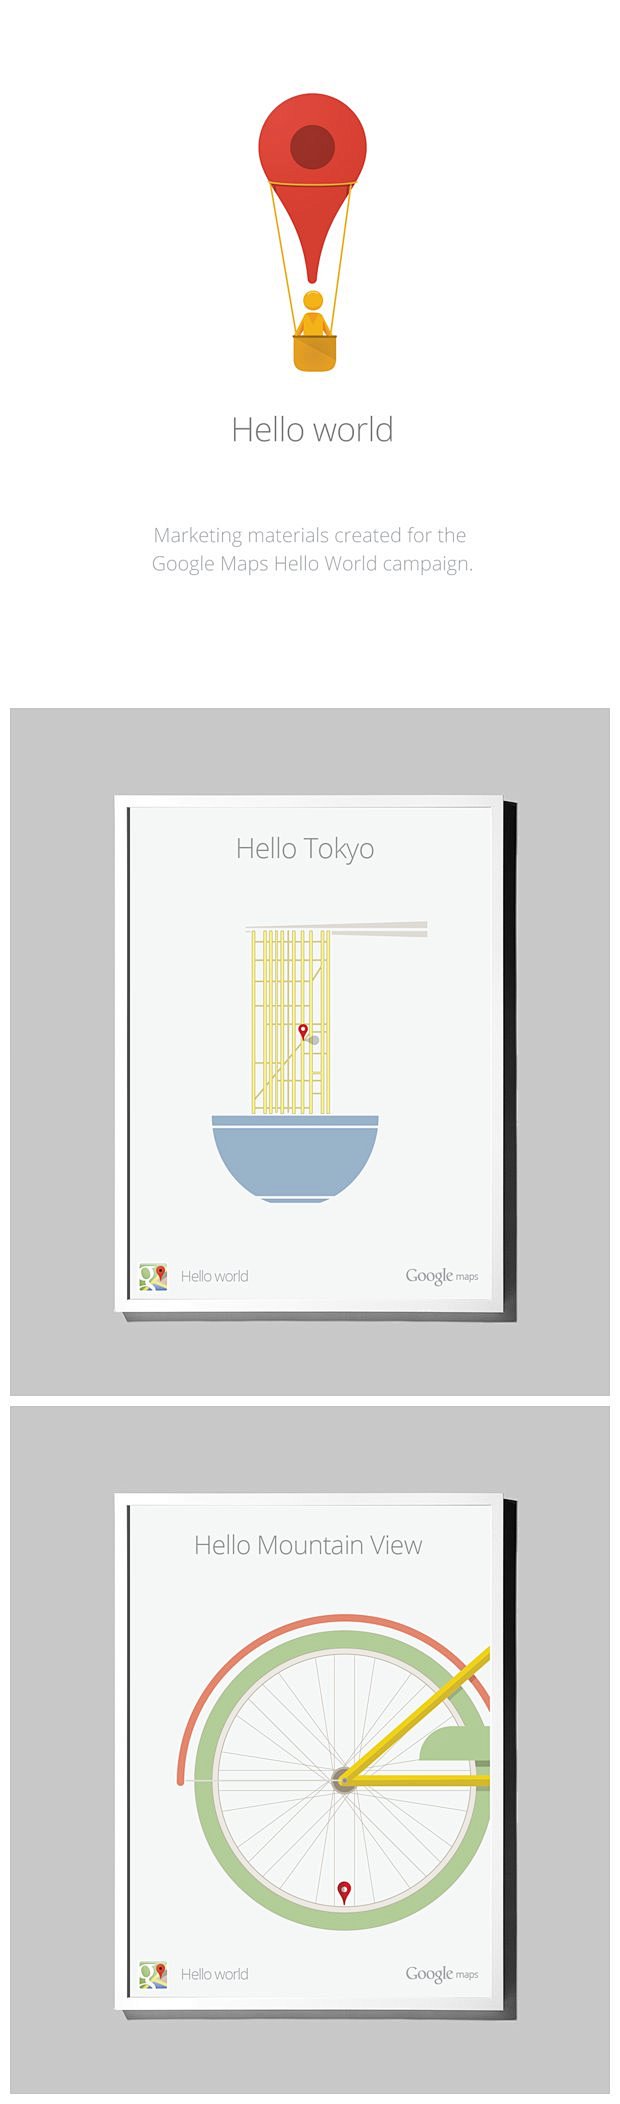 谷歌地图——Hello World 设计...